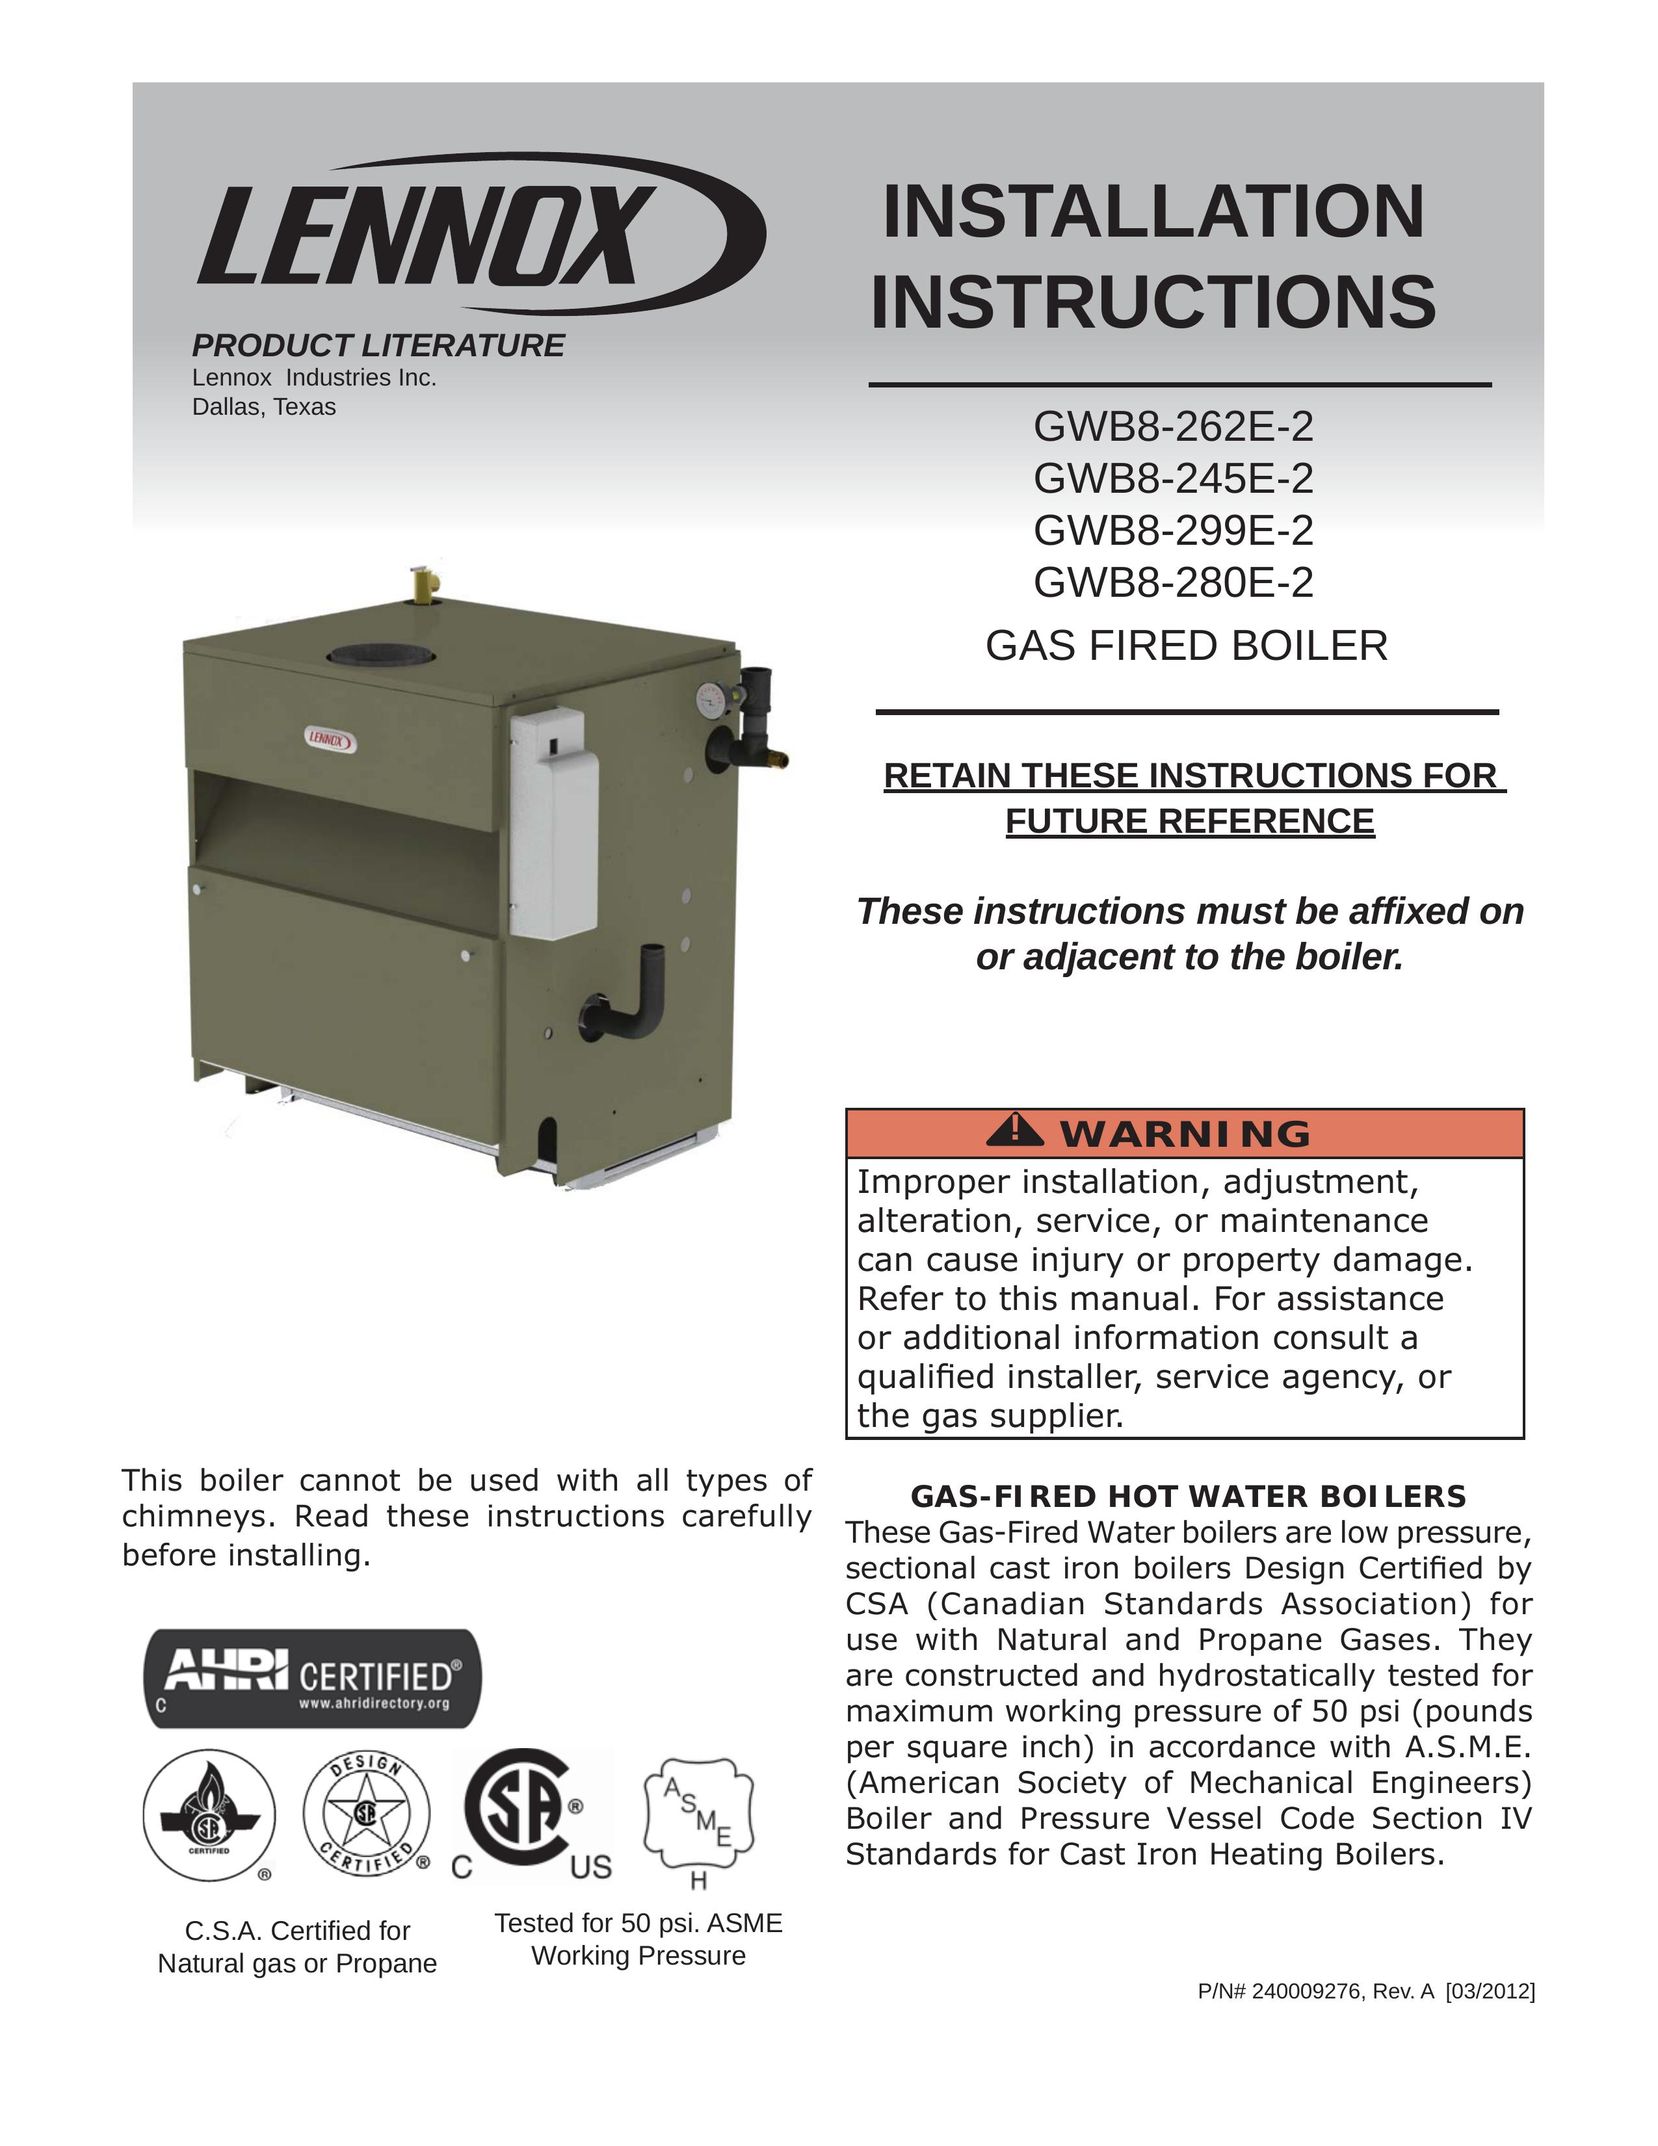 Lennox International Inc. GWB8-280E-2 Boiler User Manual